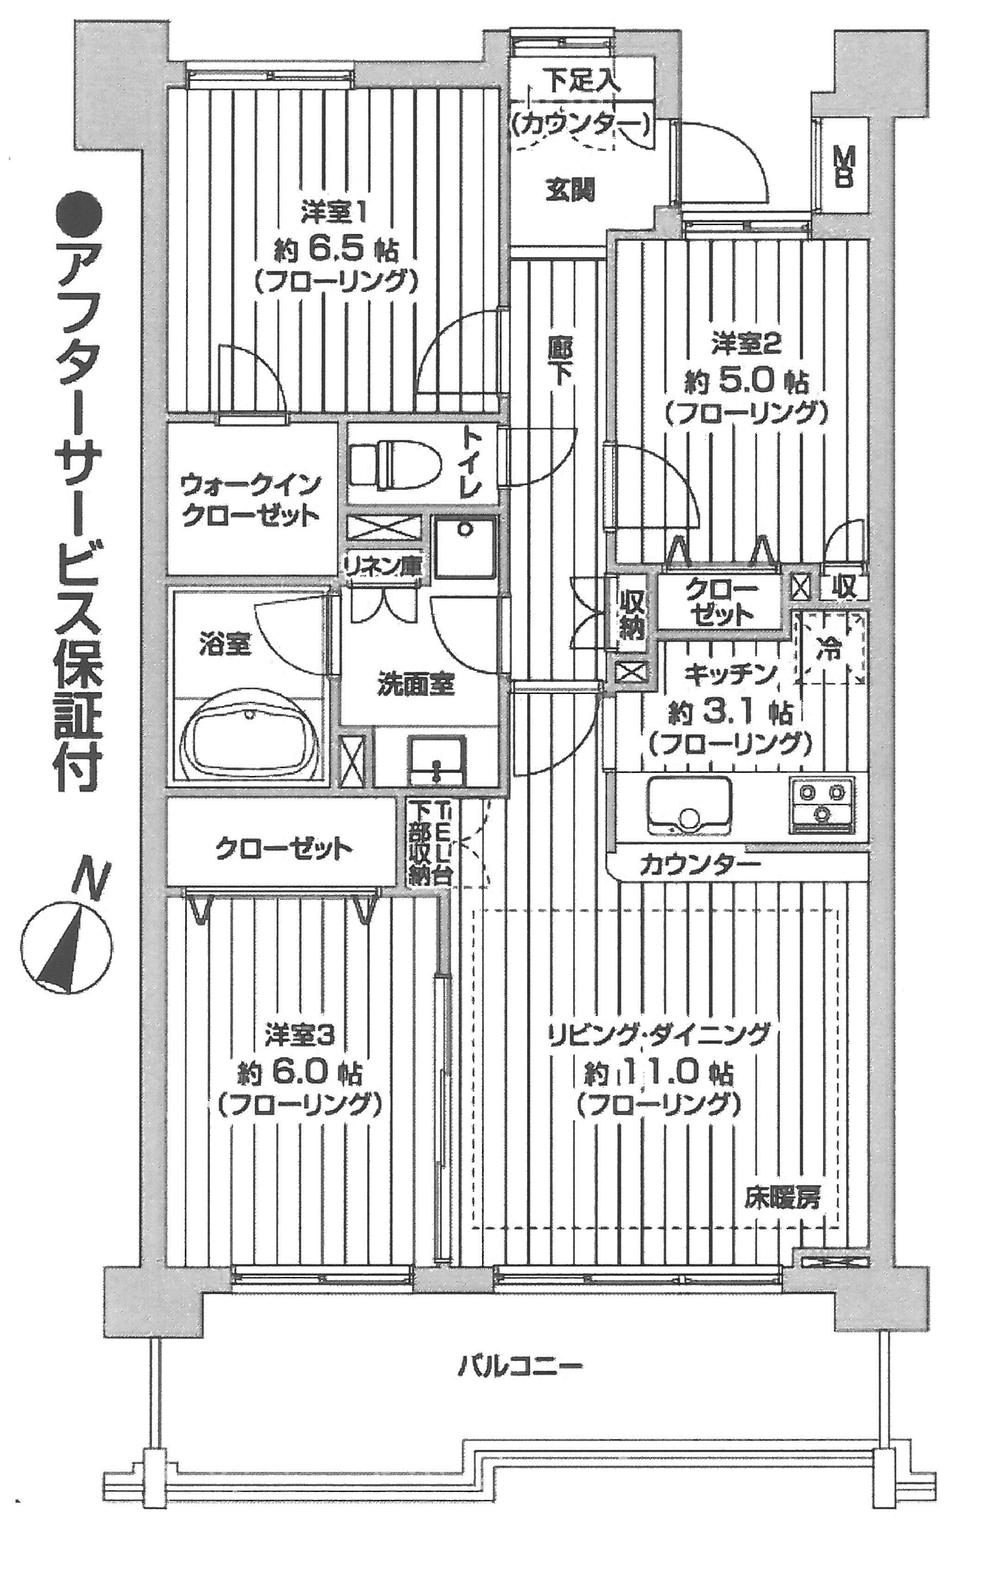 Floor plan. 3LDK, Price 23.8 million yen, Occupied area 74.08 sq m , Balcony area 12.46 sq m